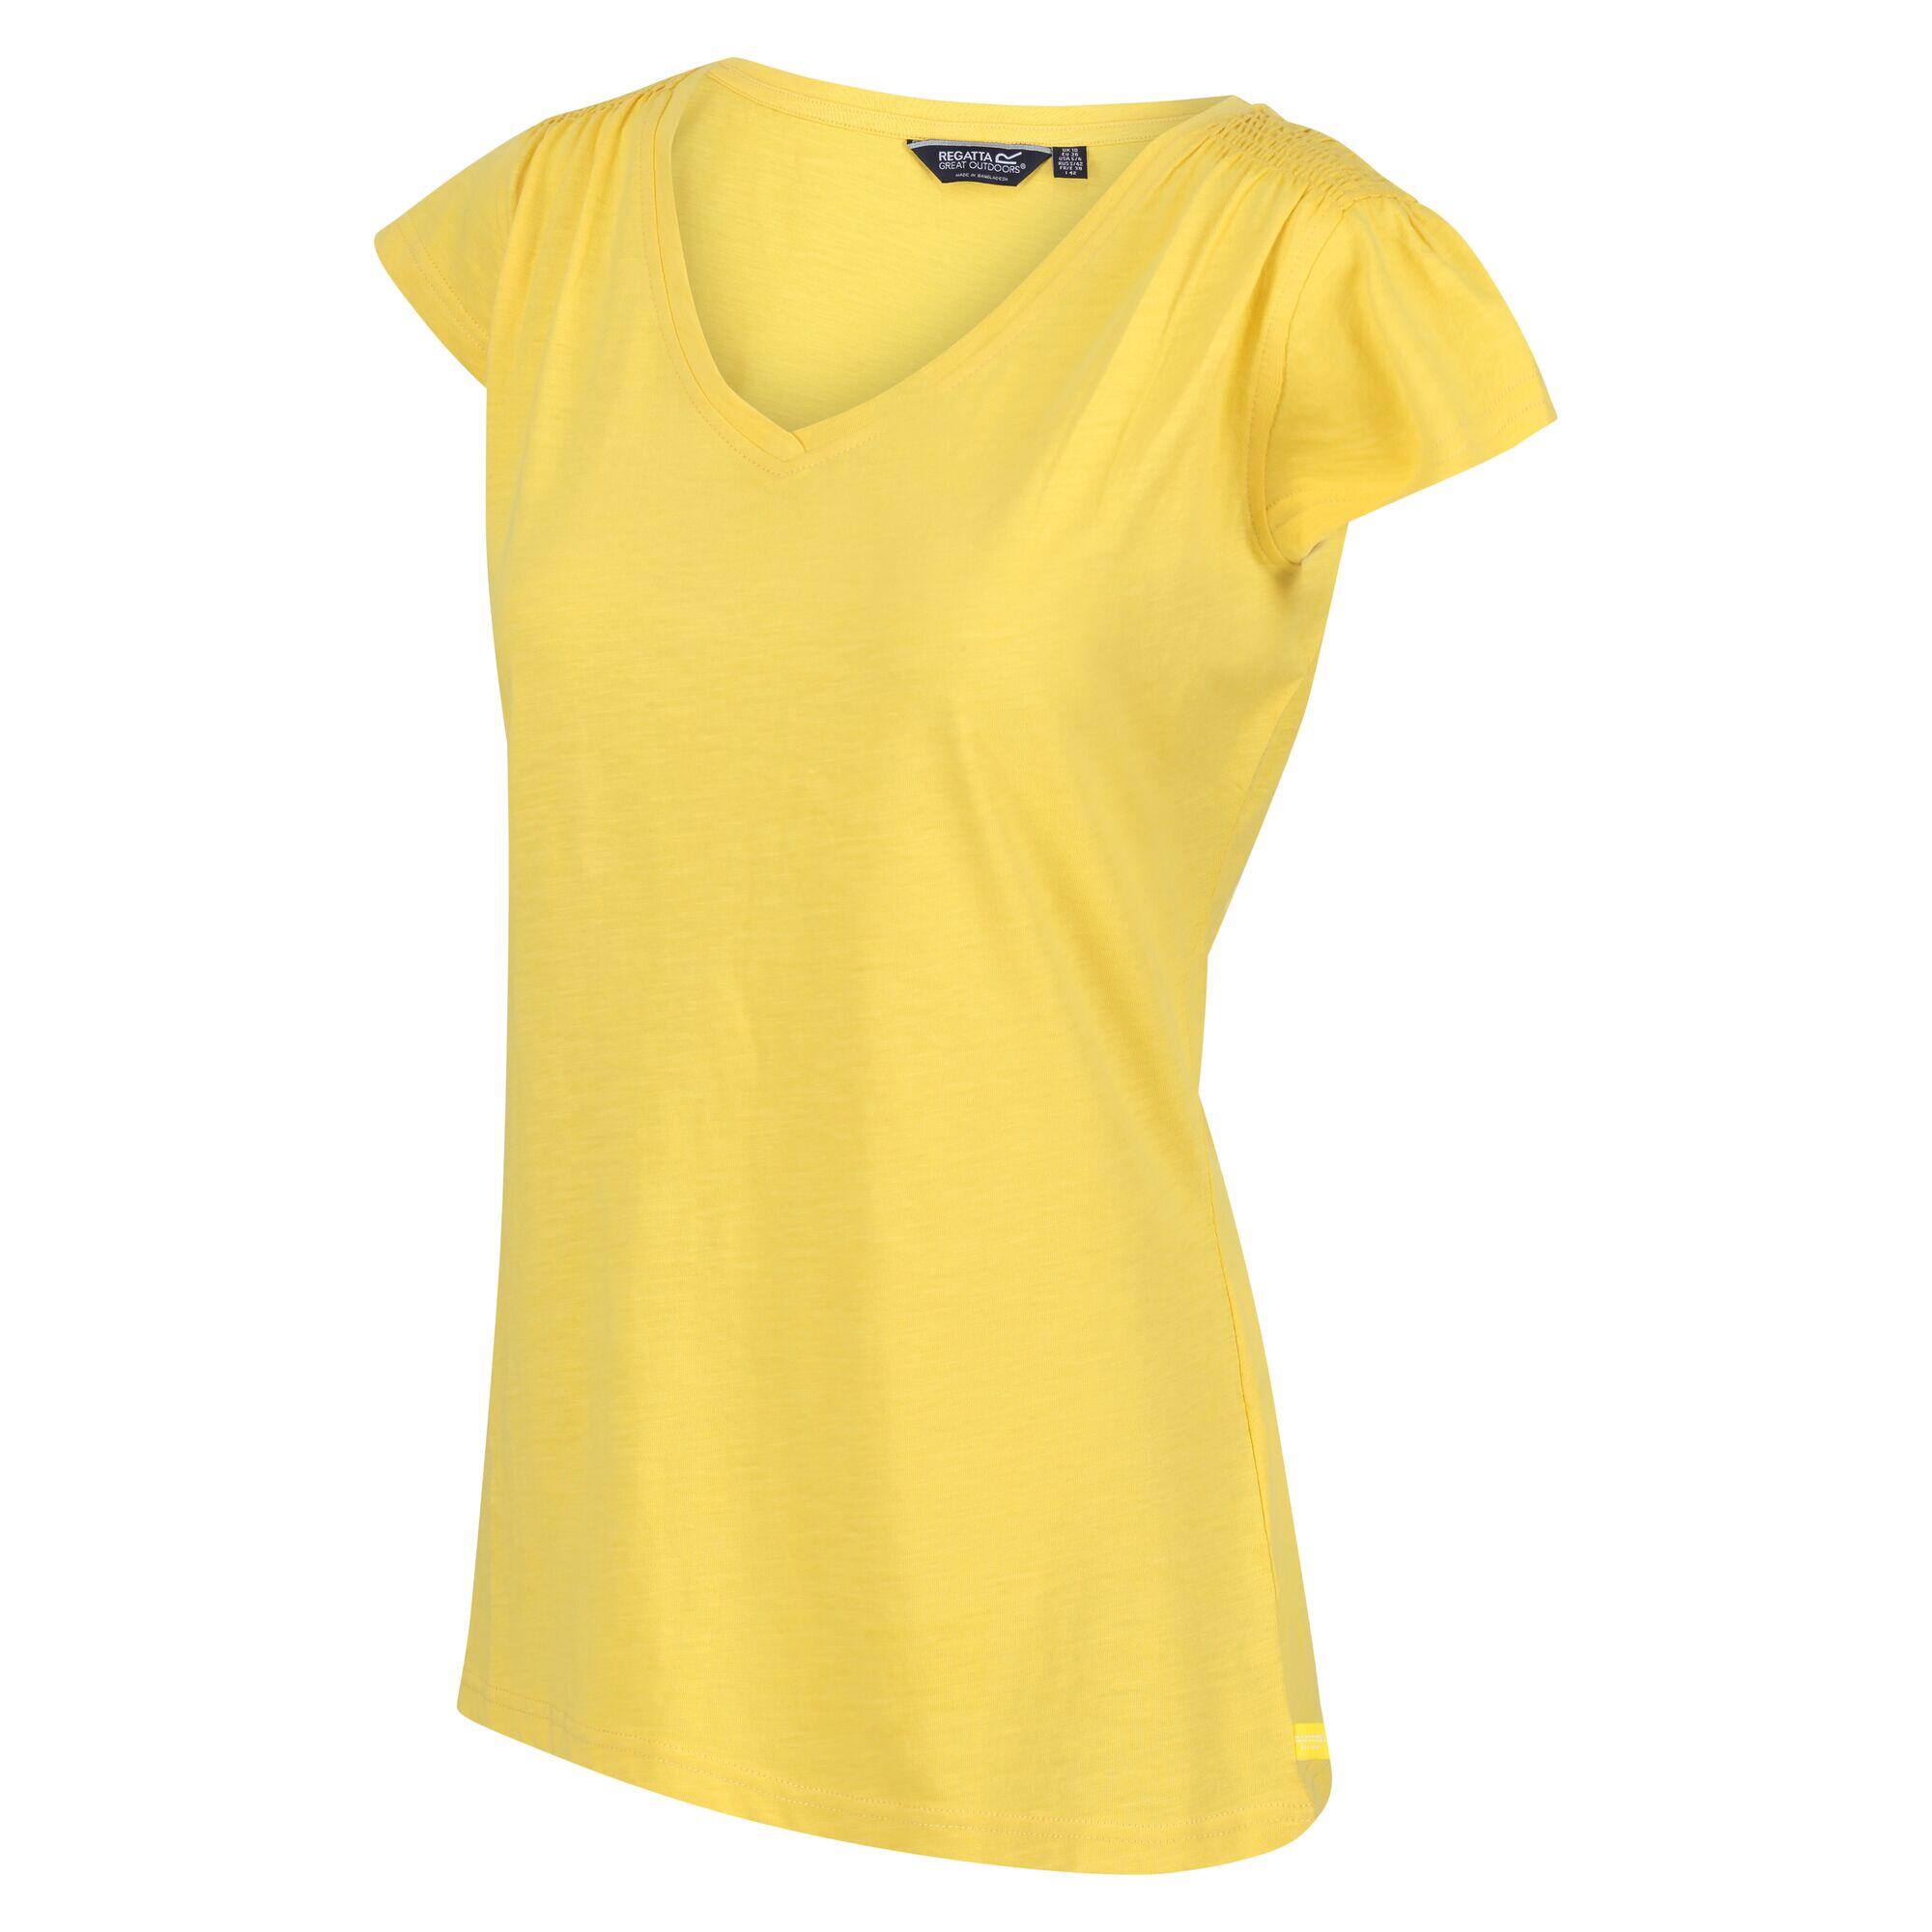 Francine Women's Walking Short Sleeve T-Shirt - Yellow 4/5